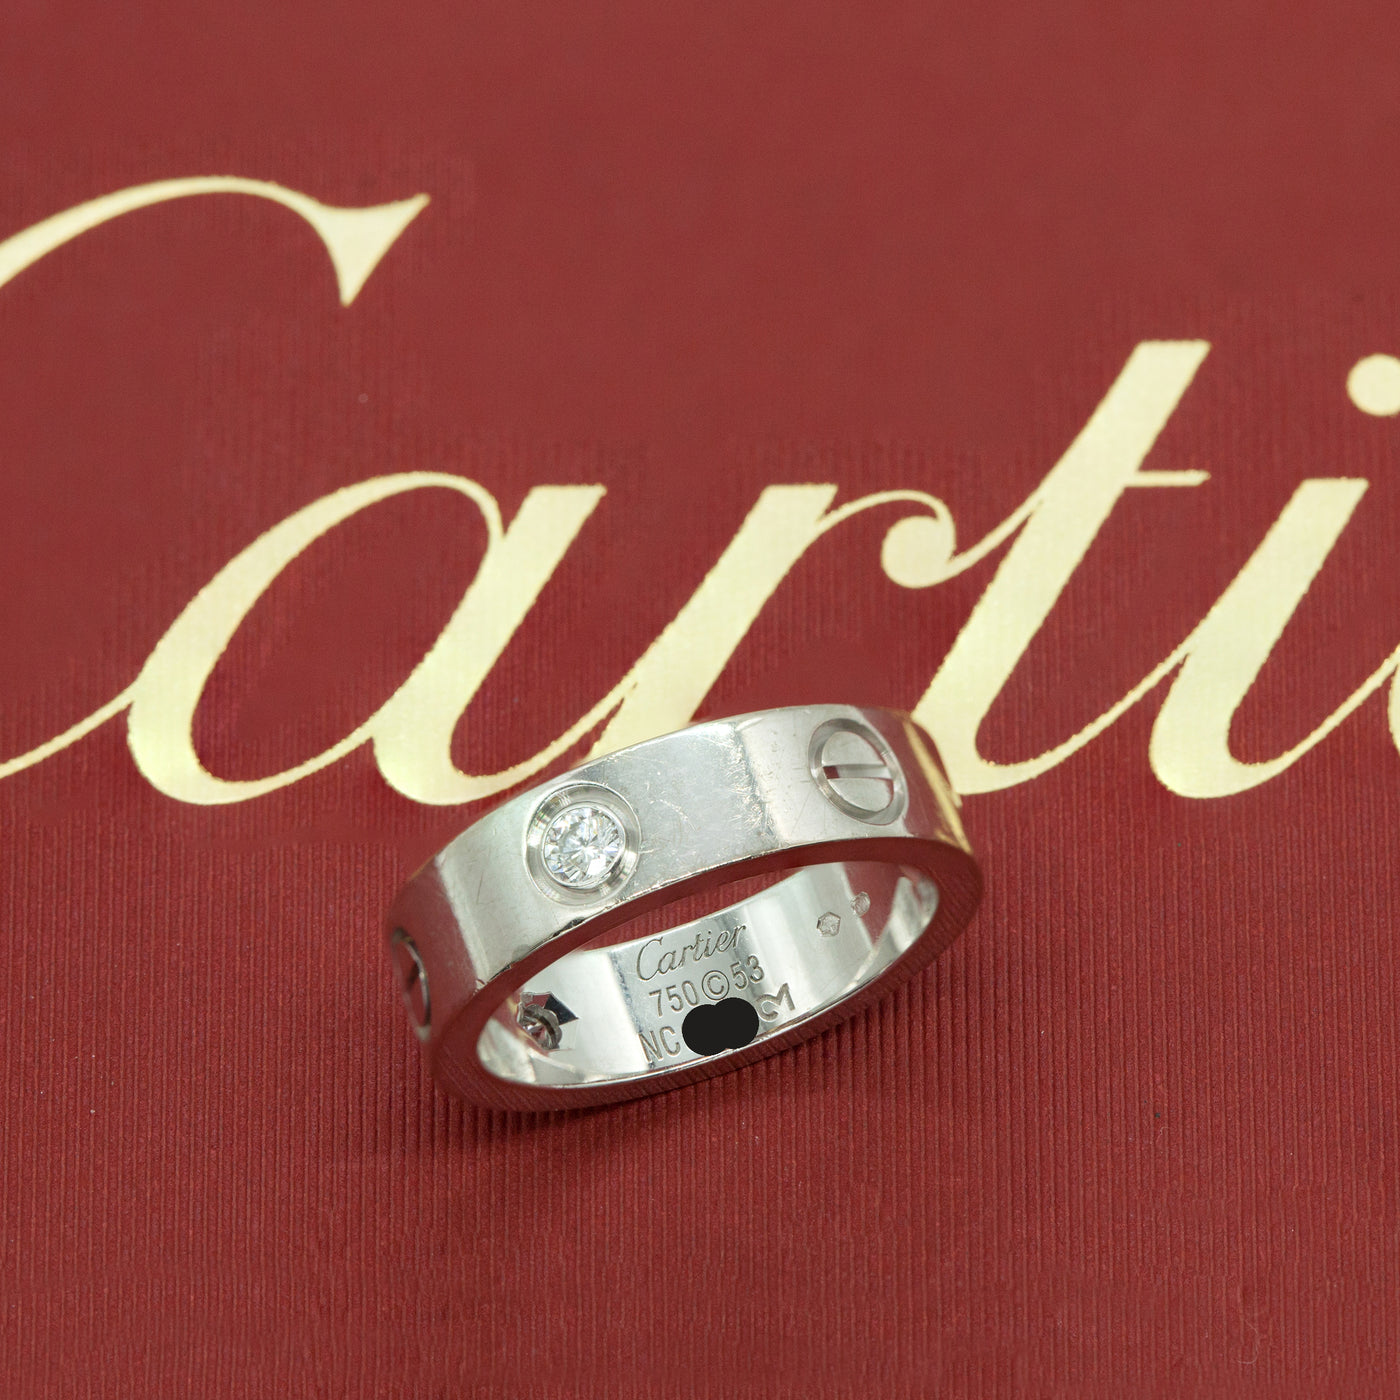 CRN4210400 - LOVE ring, diamond-paved - White gold, diamonds - Cartier